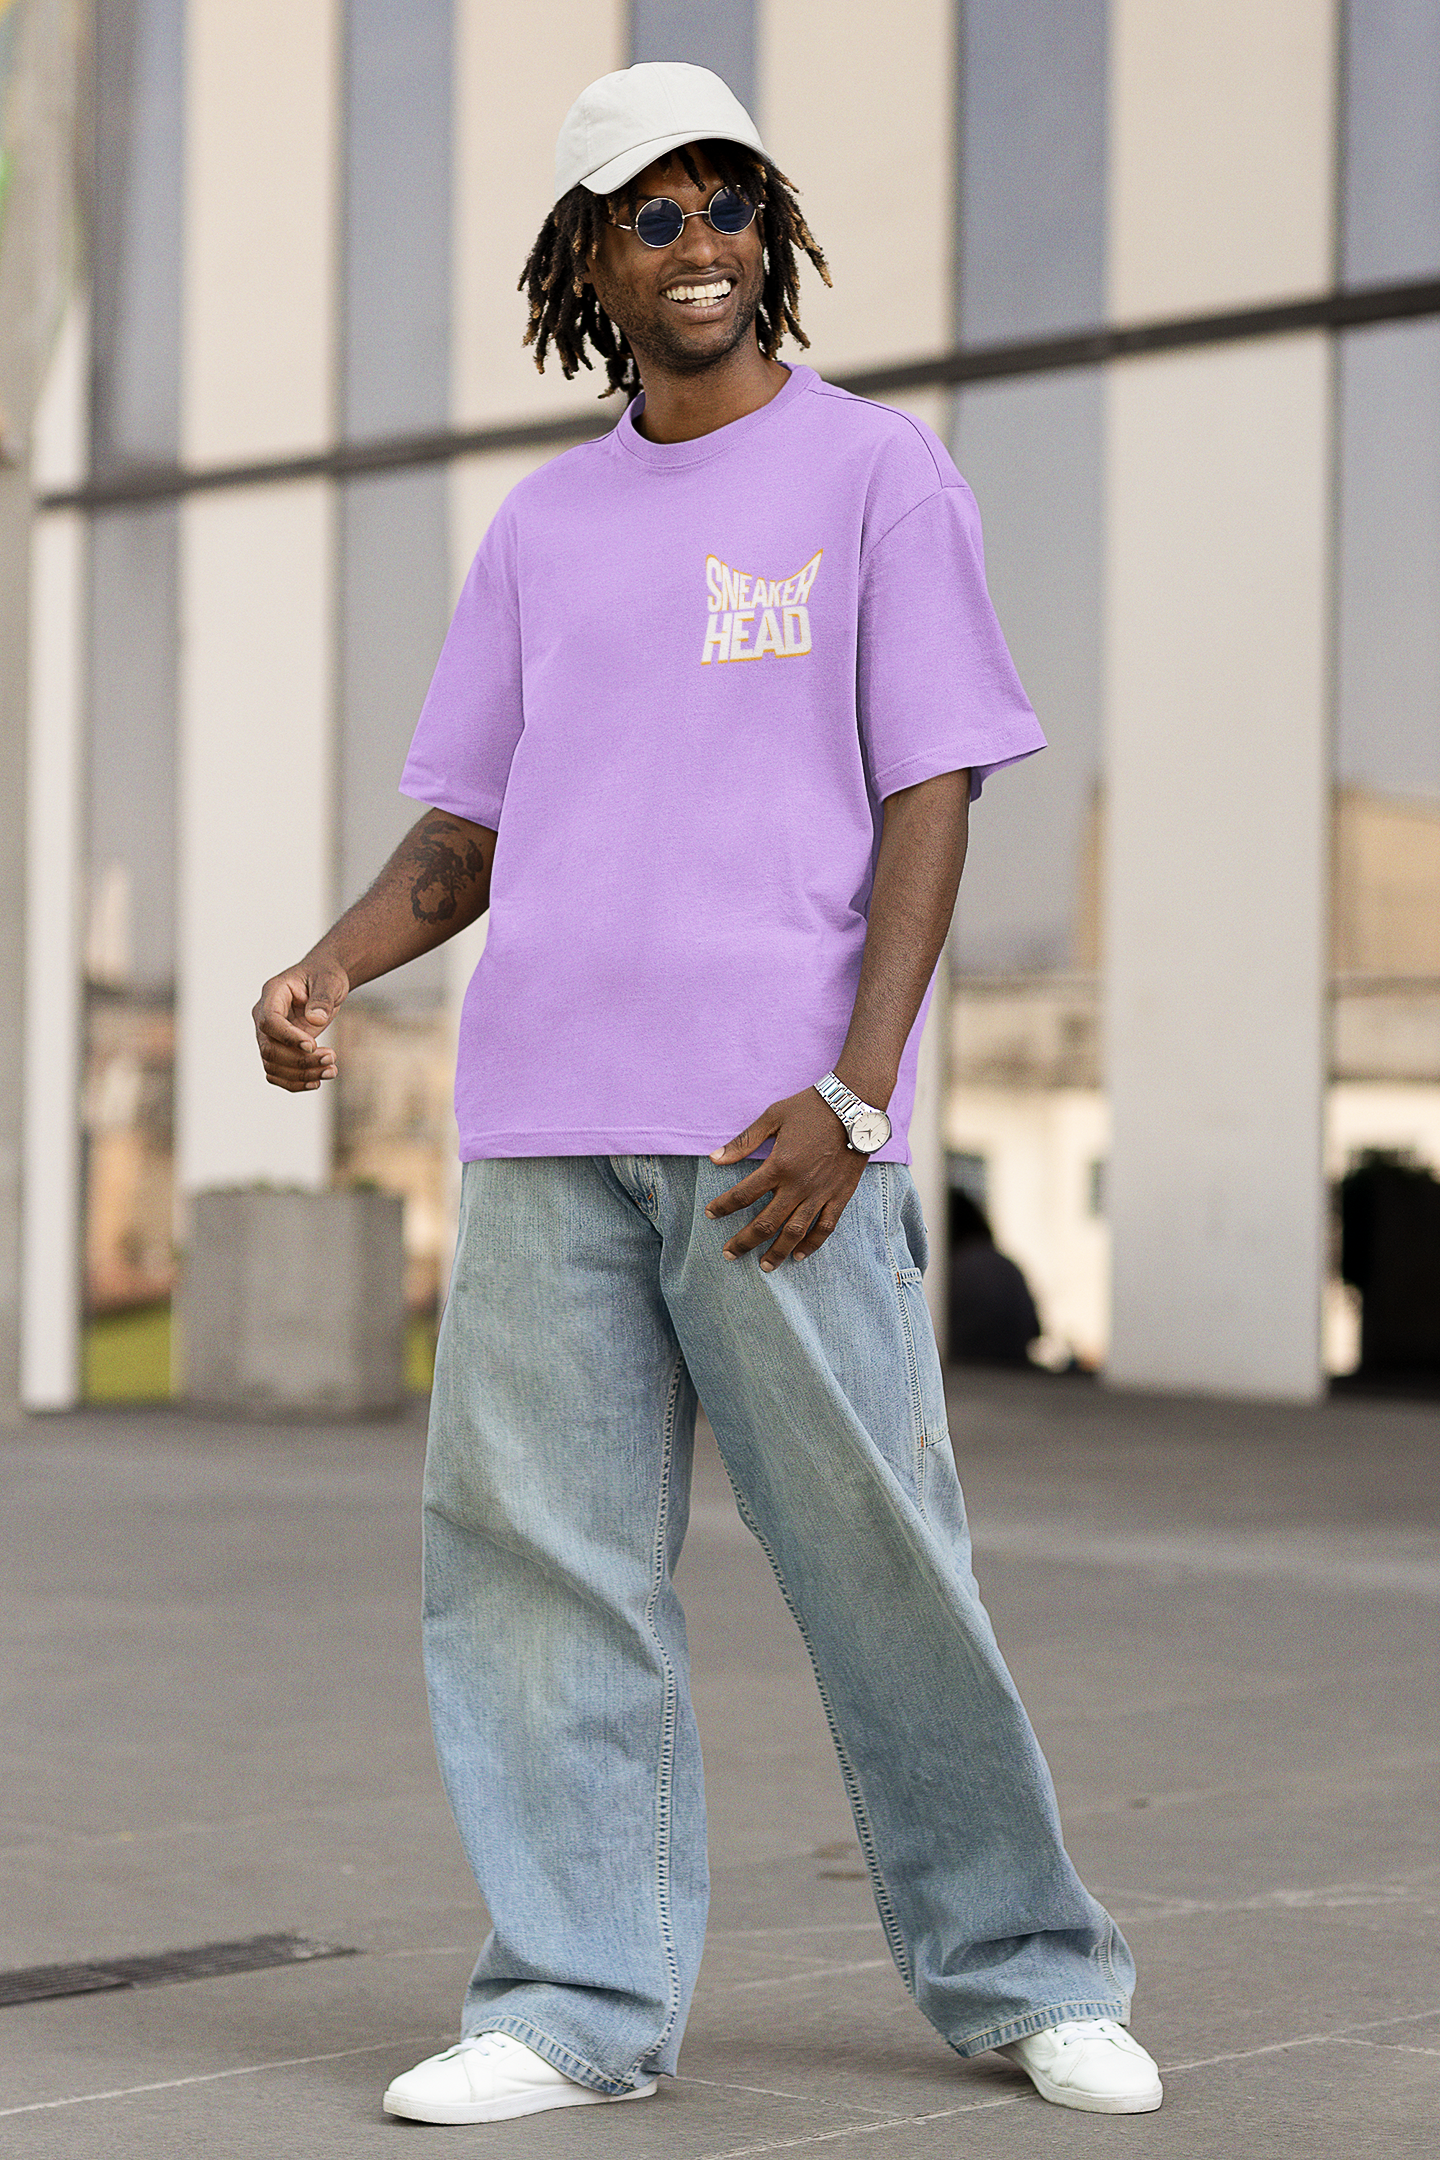 Sneaker Head Lavender Unisex over-sized t-shirt